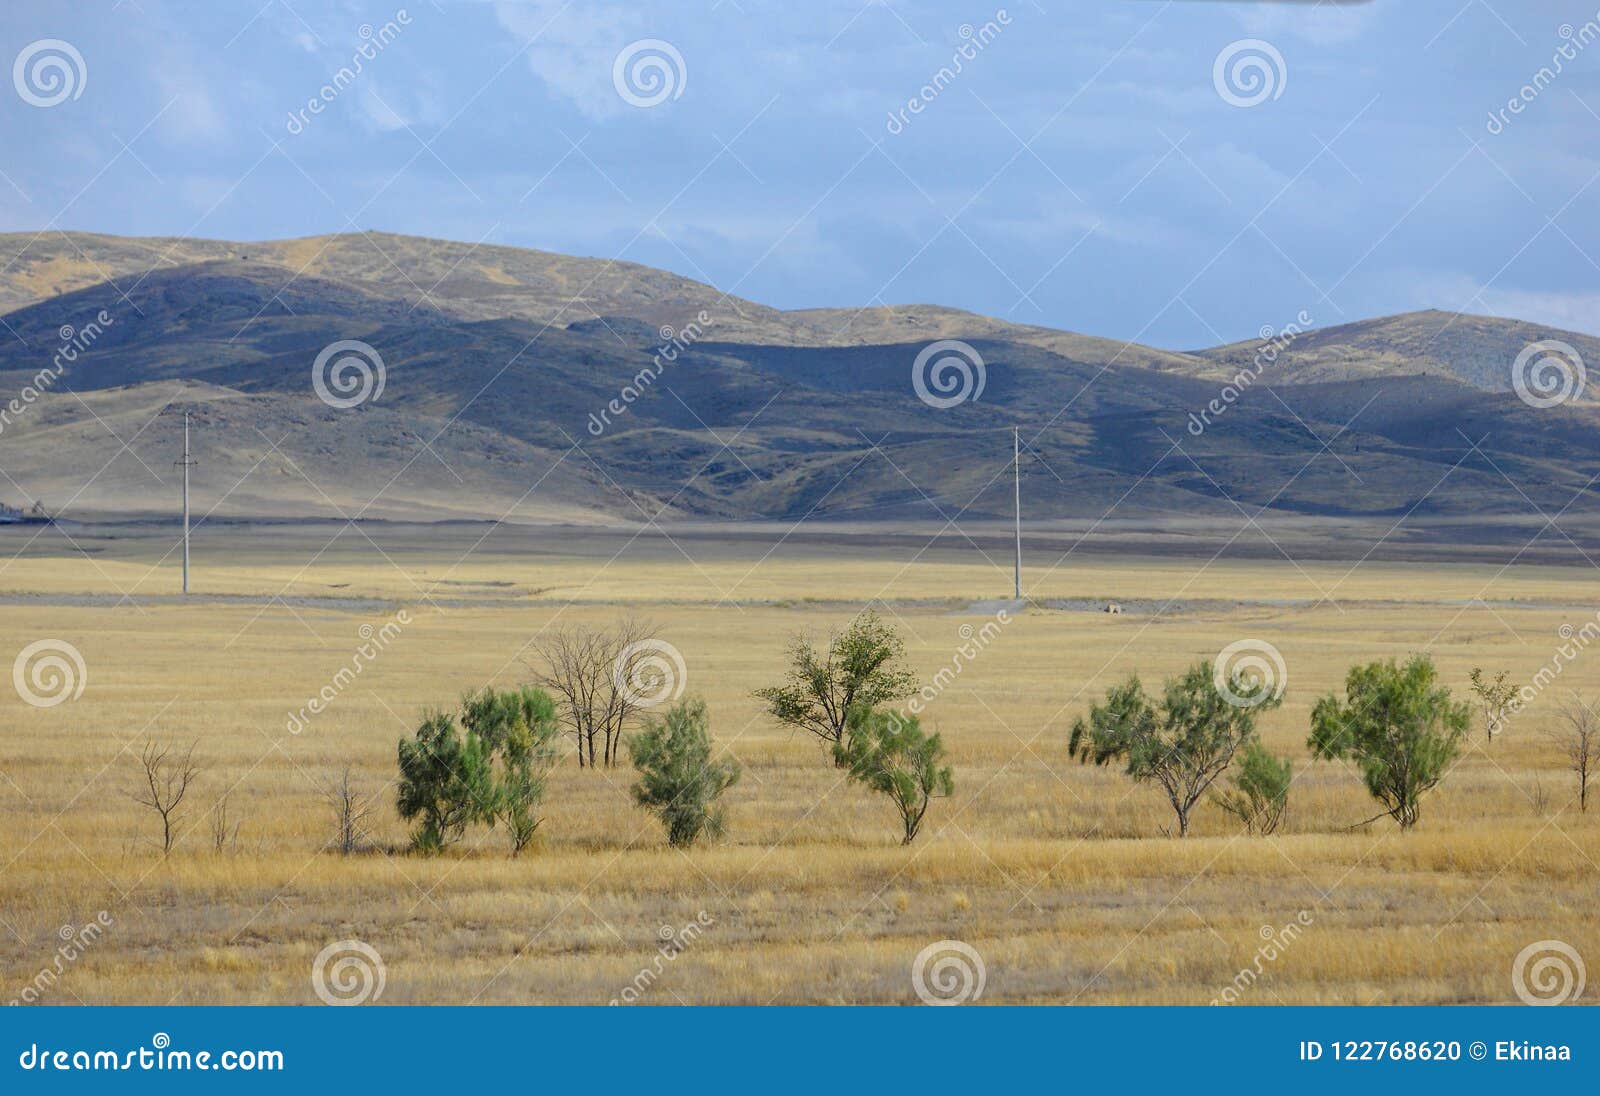 autumn landscape, steppe with mountains. prairie, veld, veldt. a